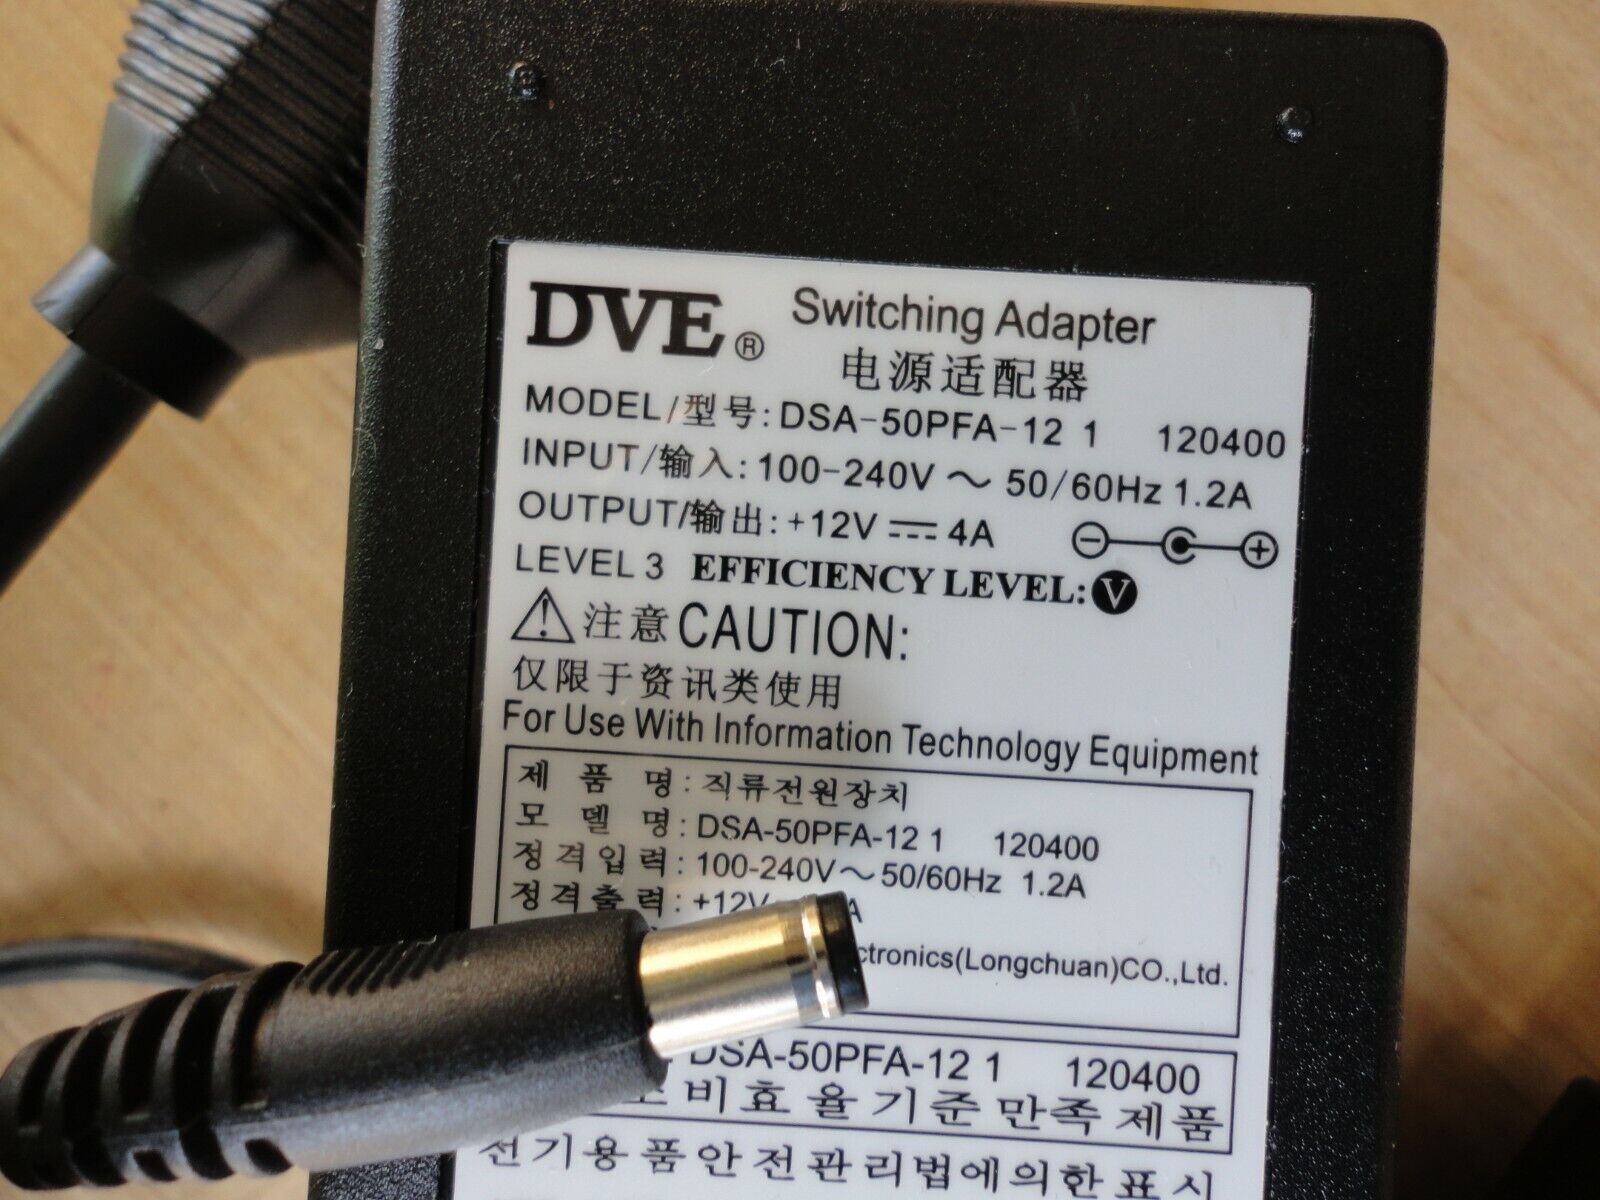 DVE 12V 4A AC Adapter Power Supply  -  DSA-50PFB-12 1  120400  used